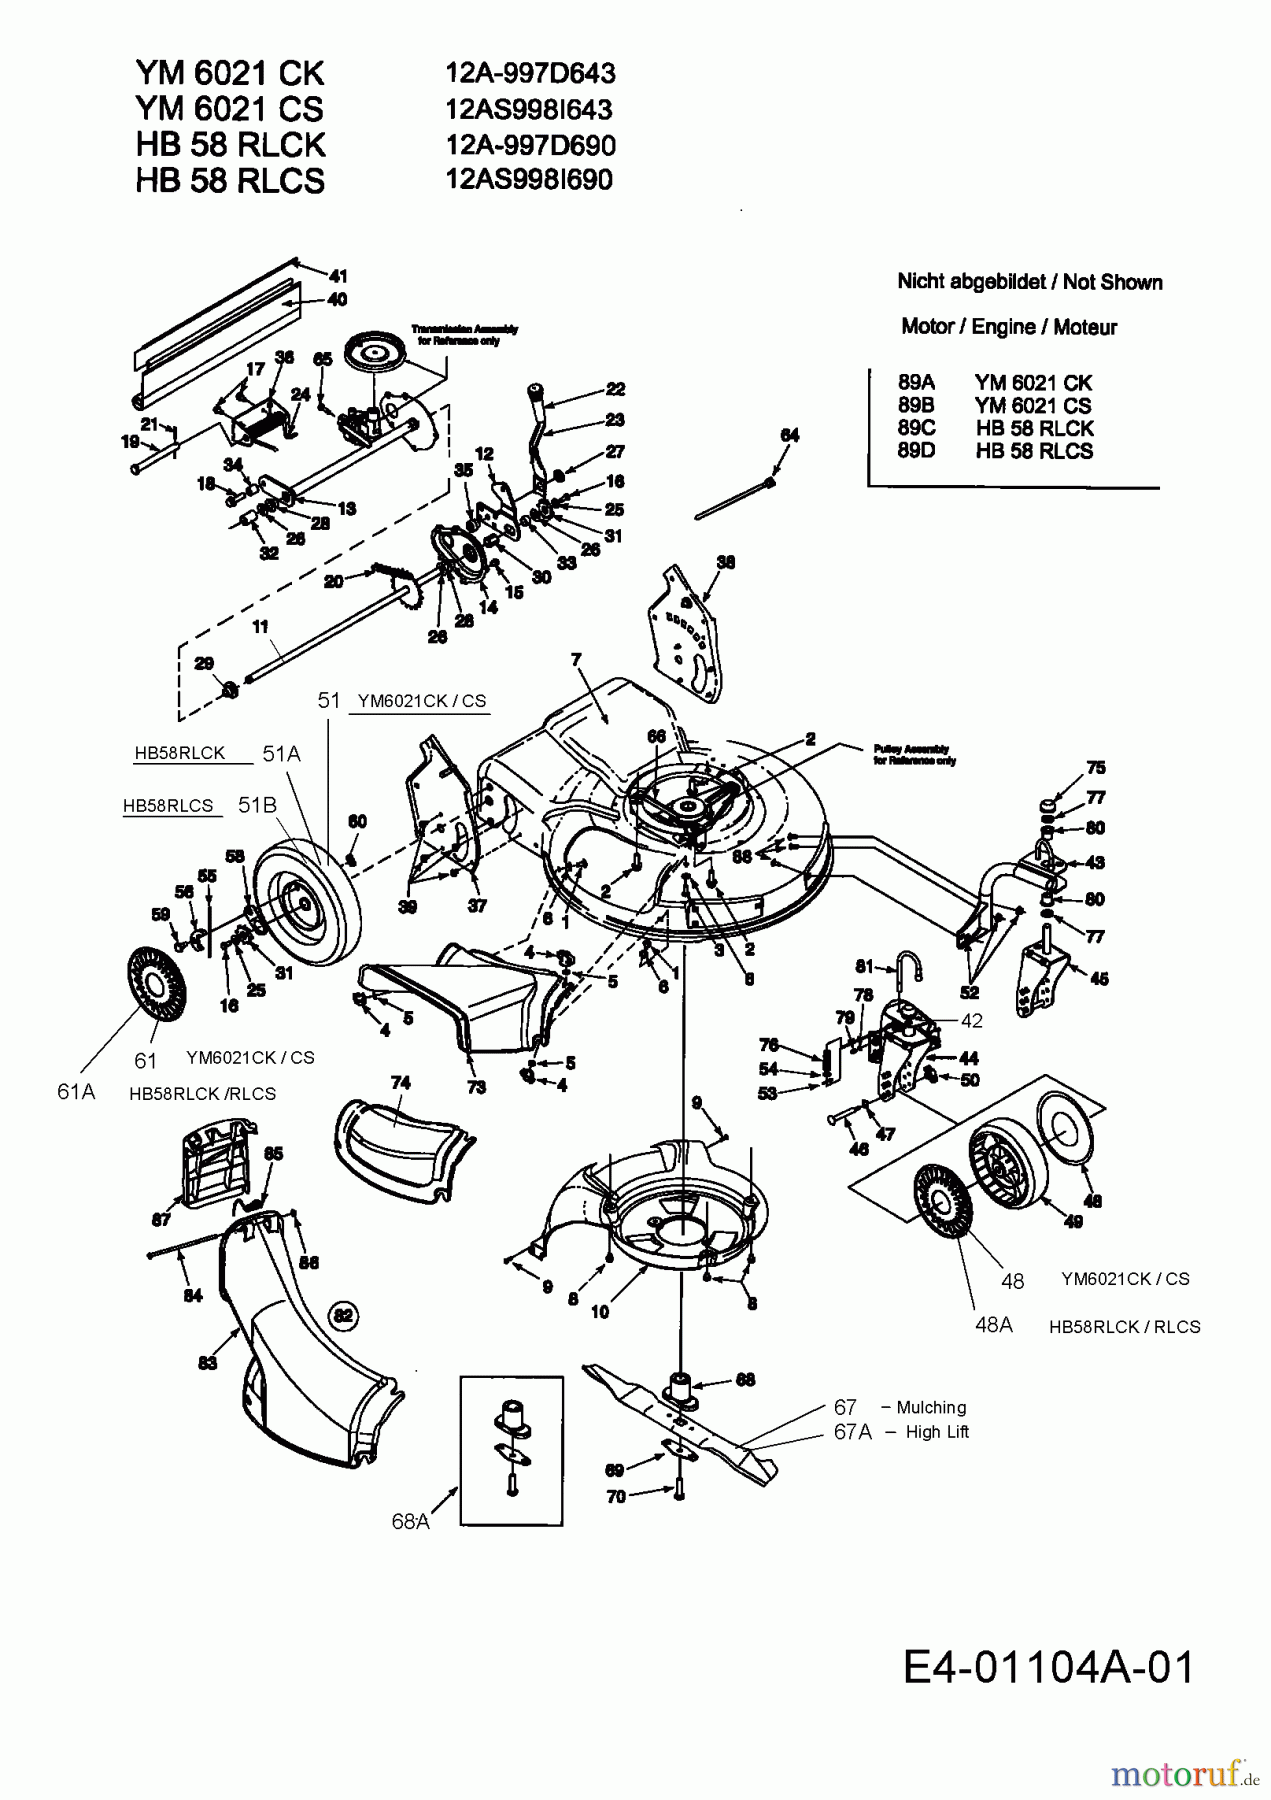  Gutbrod Motormäher mit Antrieb HB 58 RLCS 12AS998I690  (2003) Grundgerät